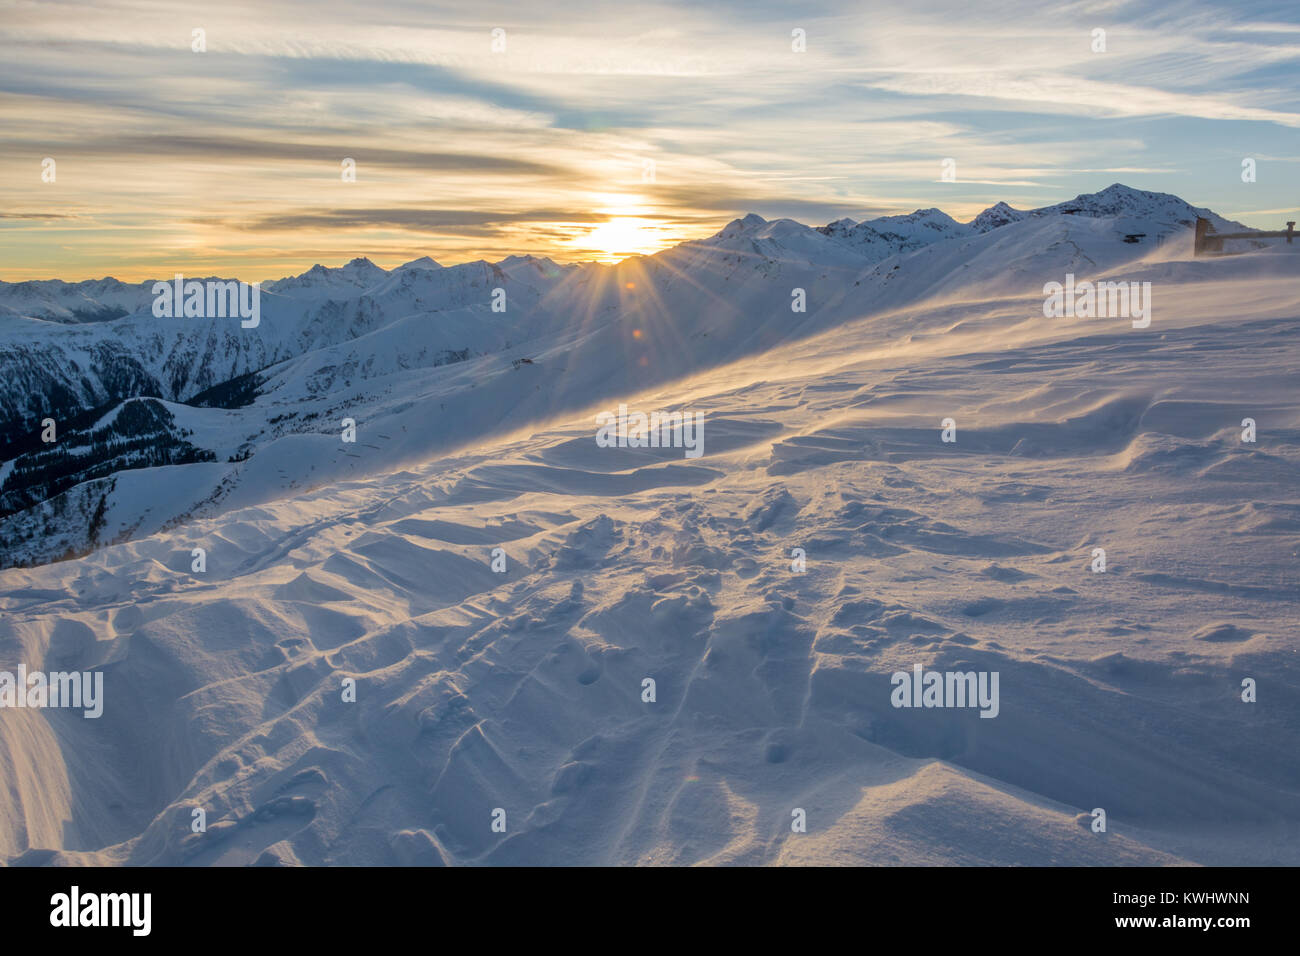 Sunset in ski resort Serfaus Fiss Ladis in Austria with snowy ...